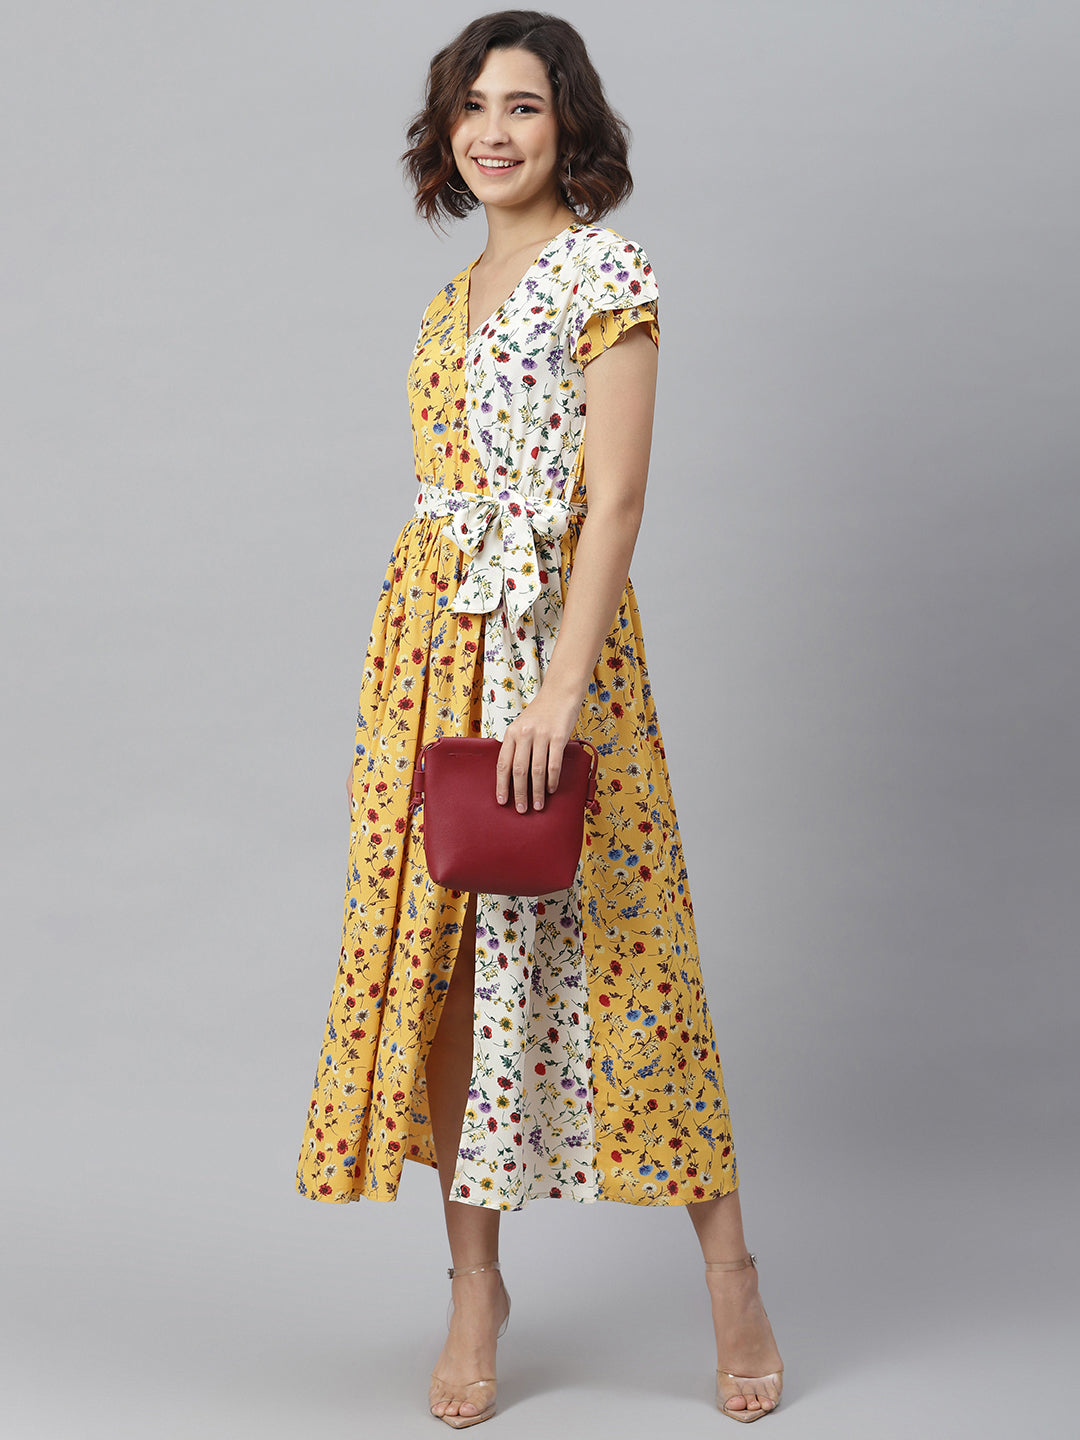 Women's Yellow & White Printed Wrap Dress with Contrast panel - StyleStone